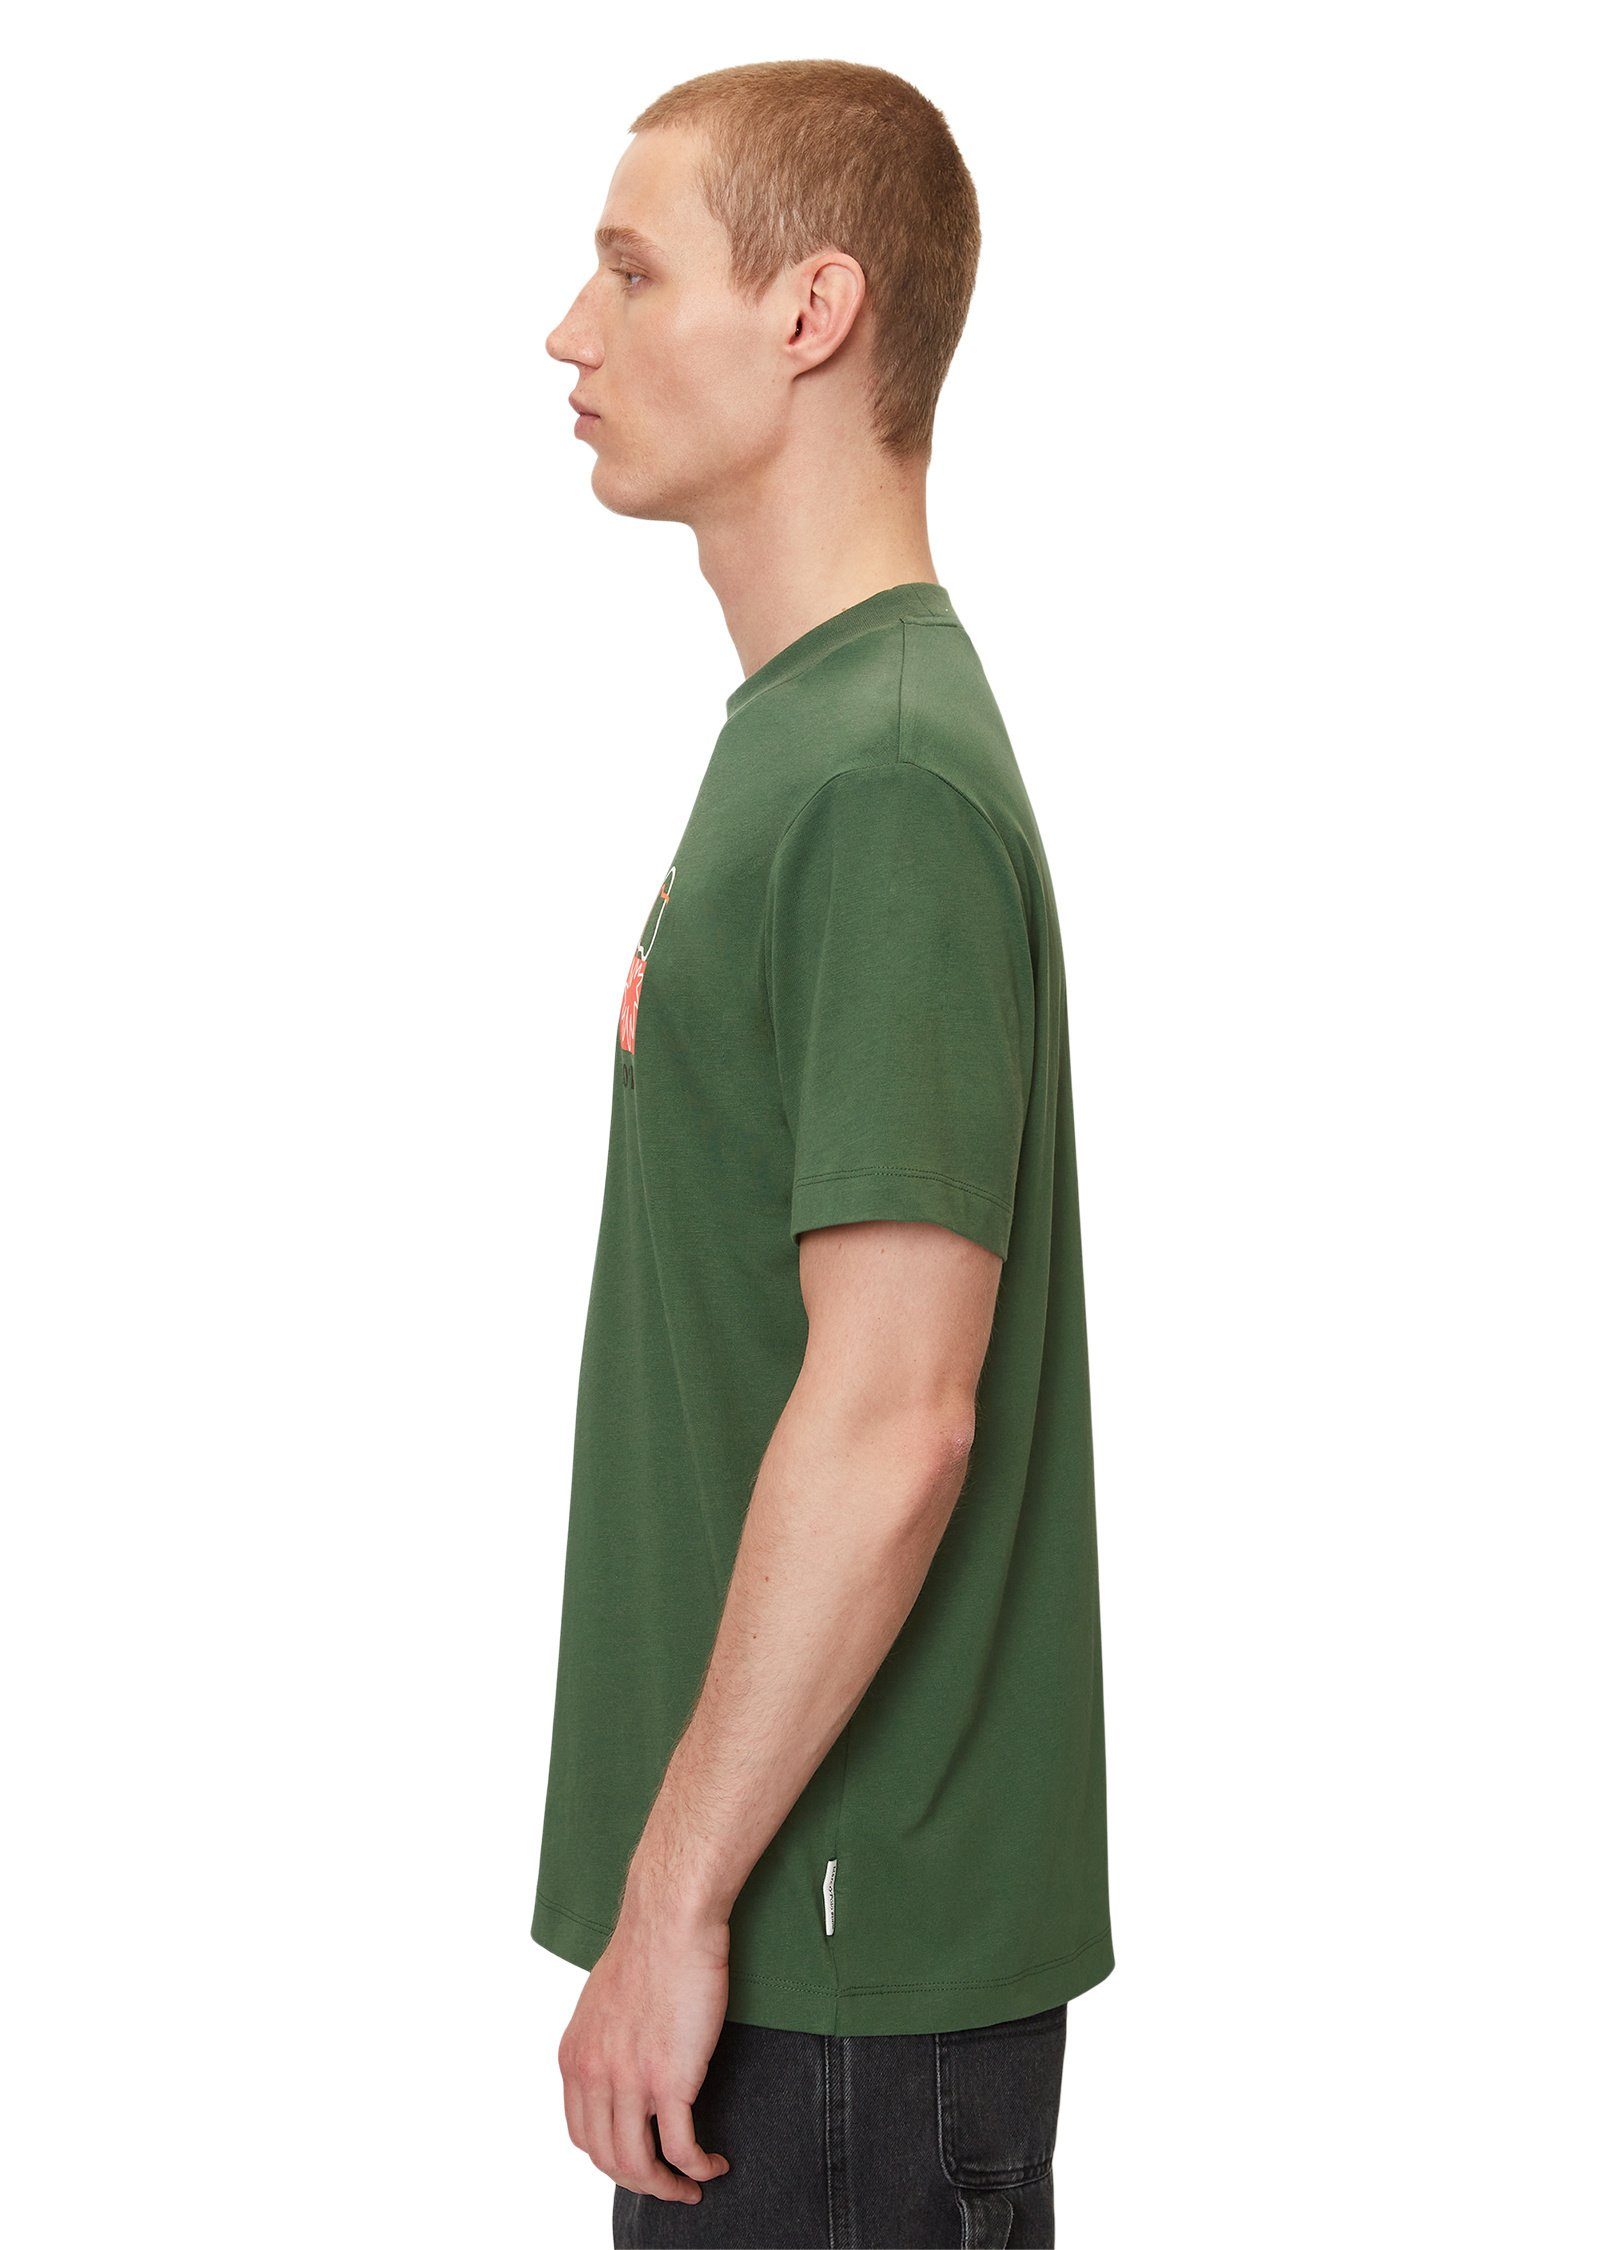 Farbe O'Polo markantem Marc Rückenprint grün nach je DENIM T-Shirt mit